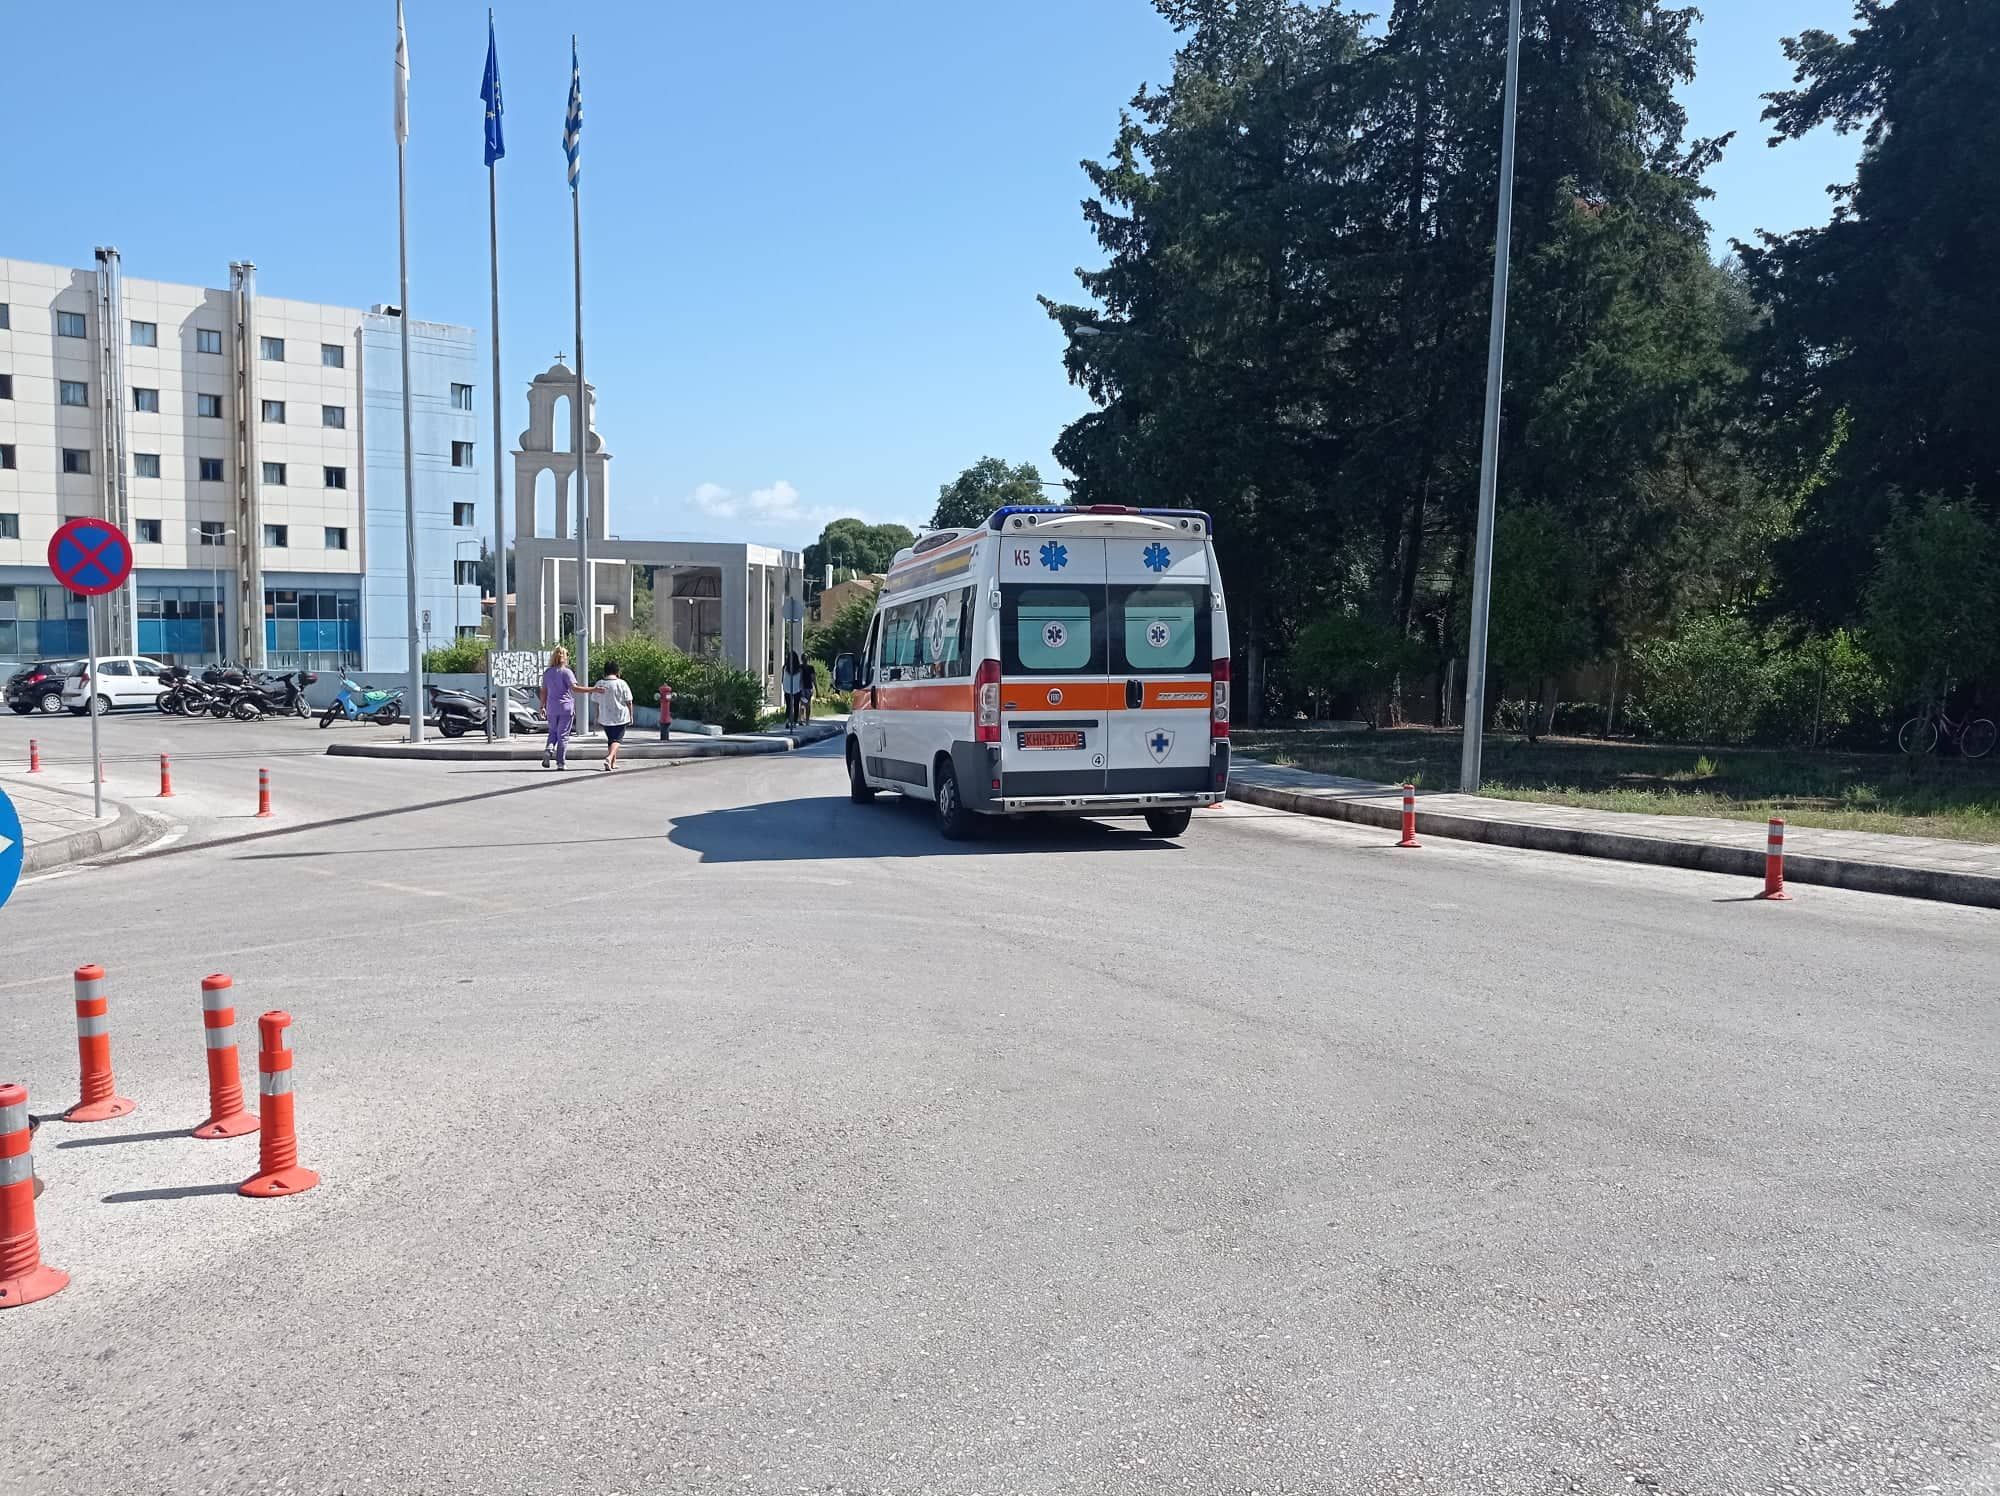 Latest Covid update from Corfu Hospital - 24 November